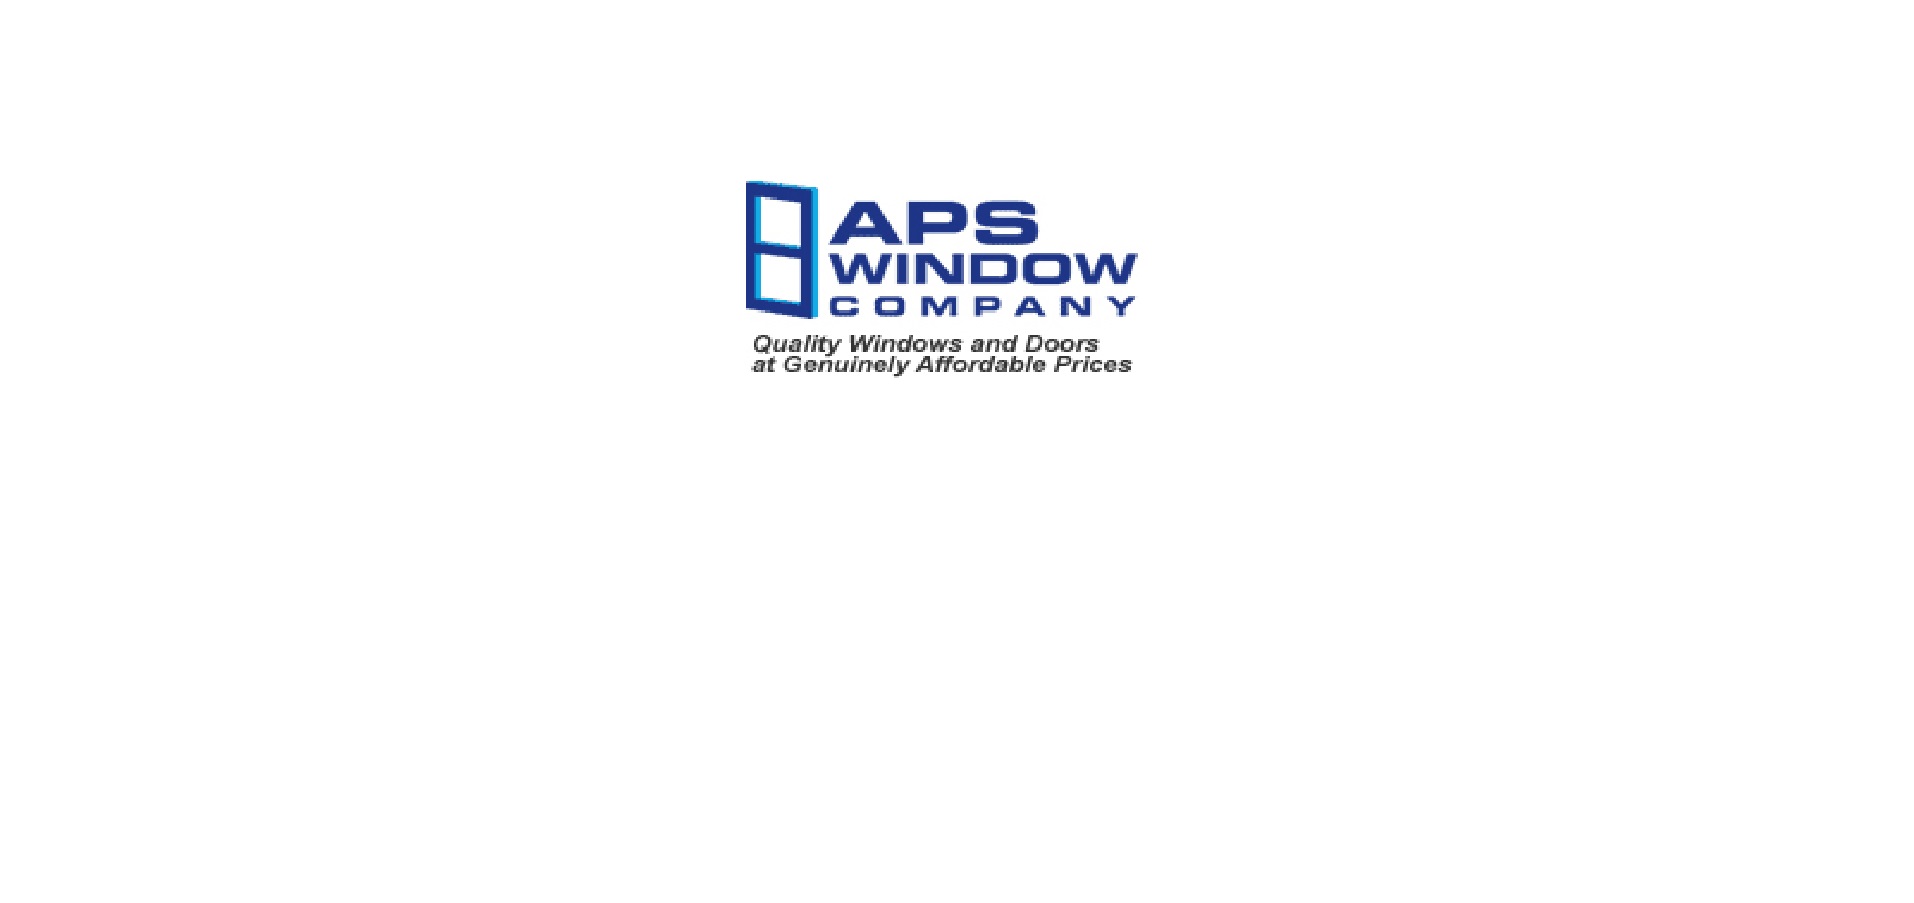 APS WINDOW COMPANY